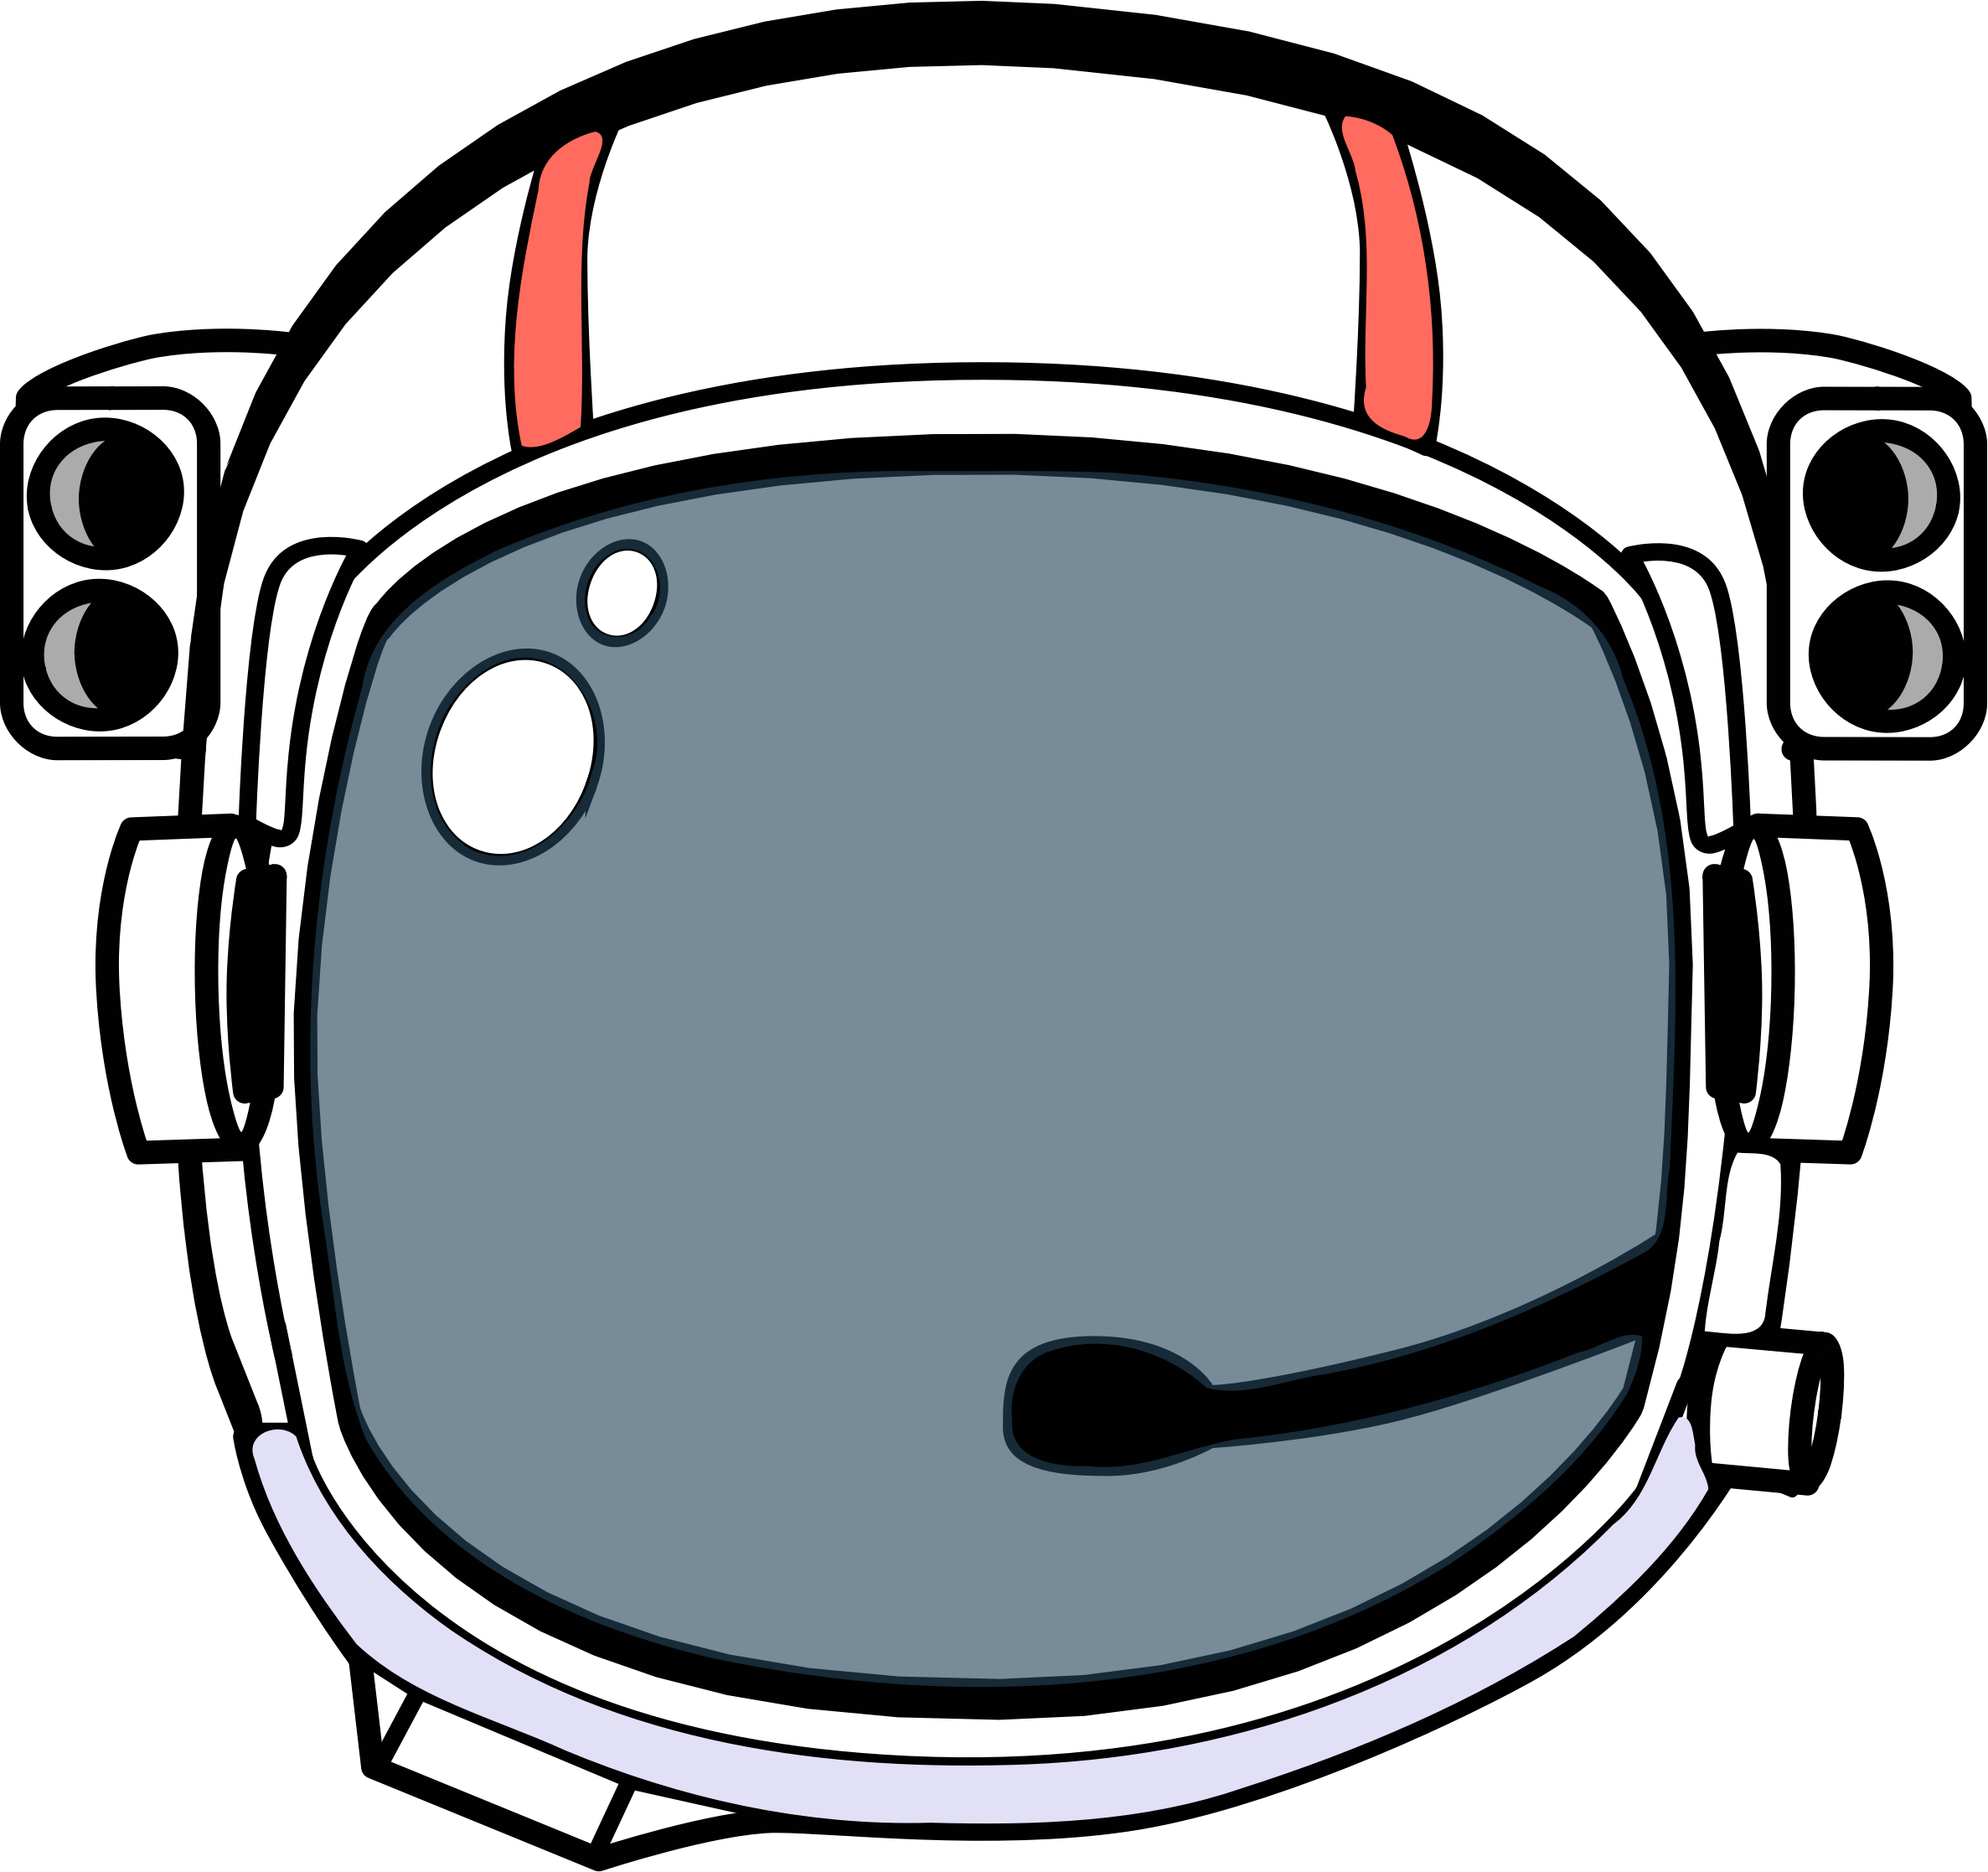 hats clipart astronaut